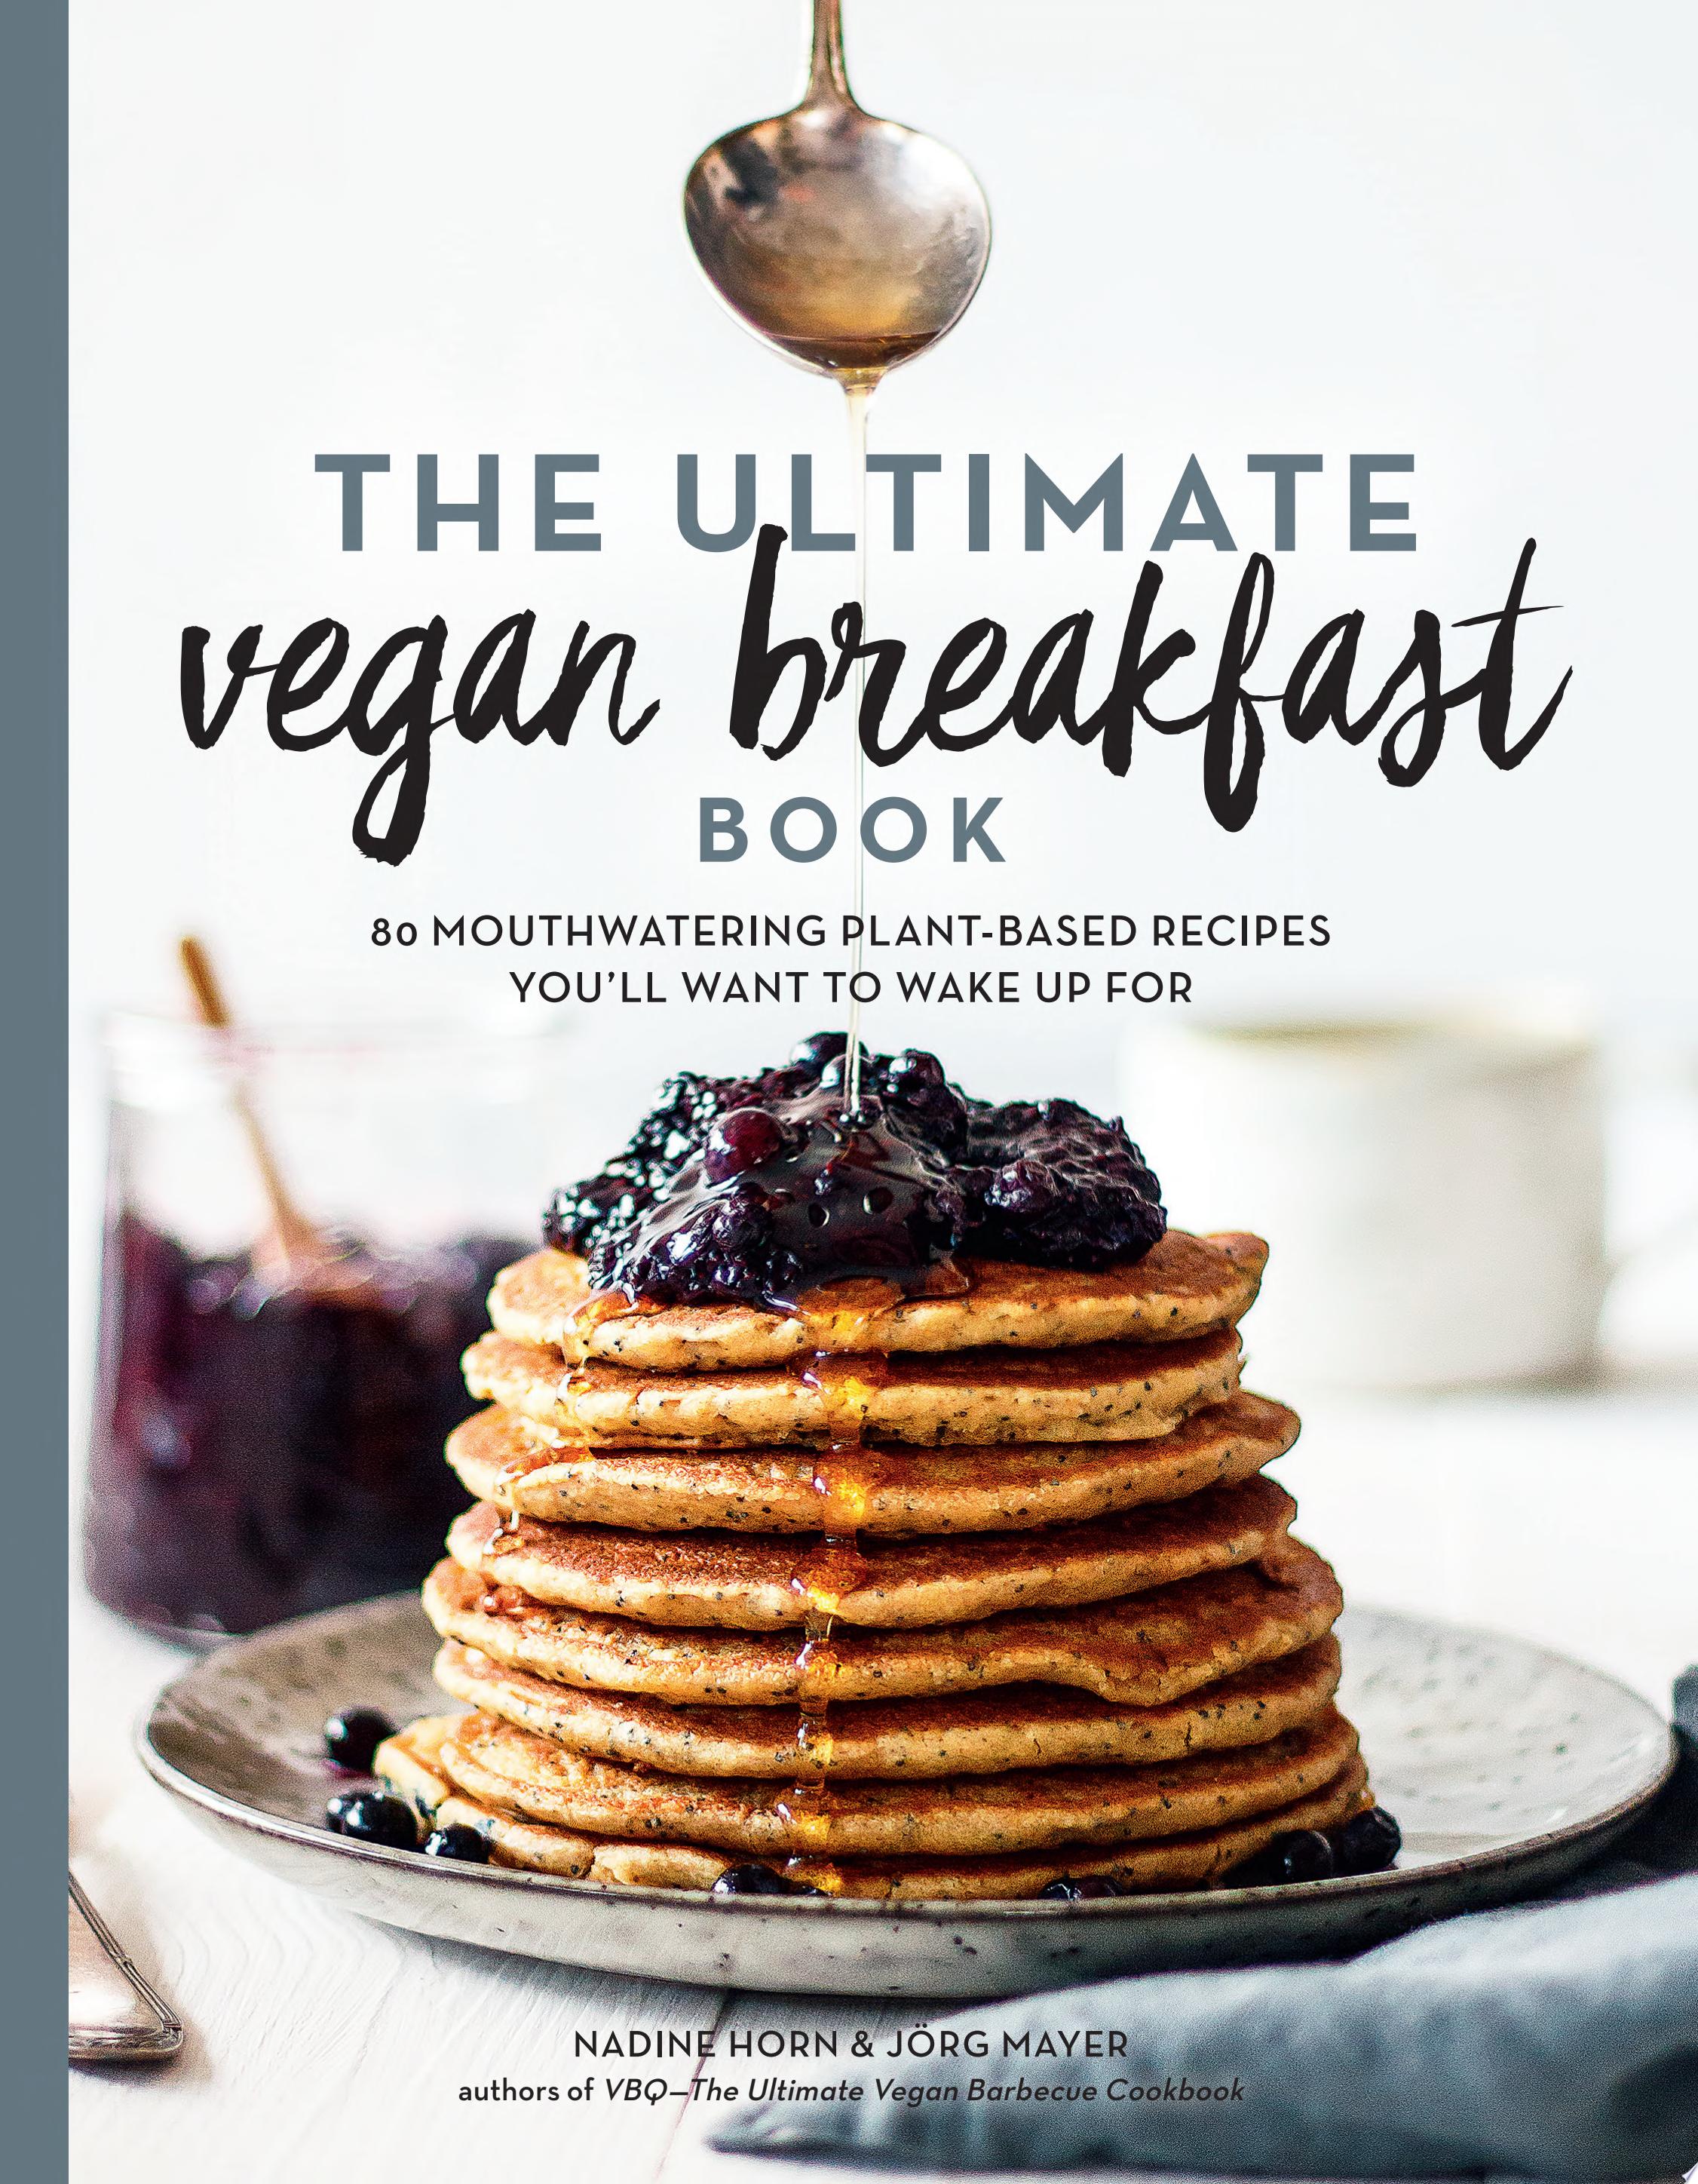 Image for "The Ultimate Vegan Breakfast Book"